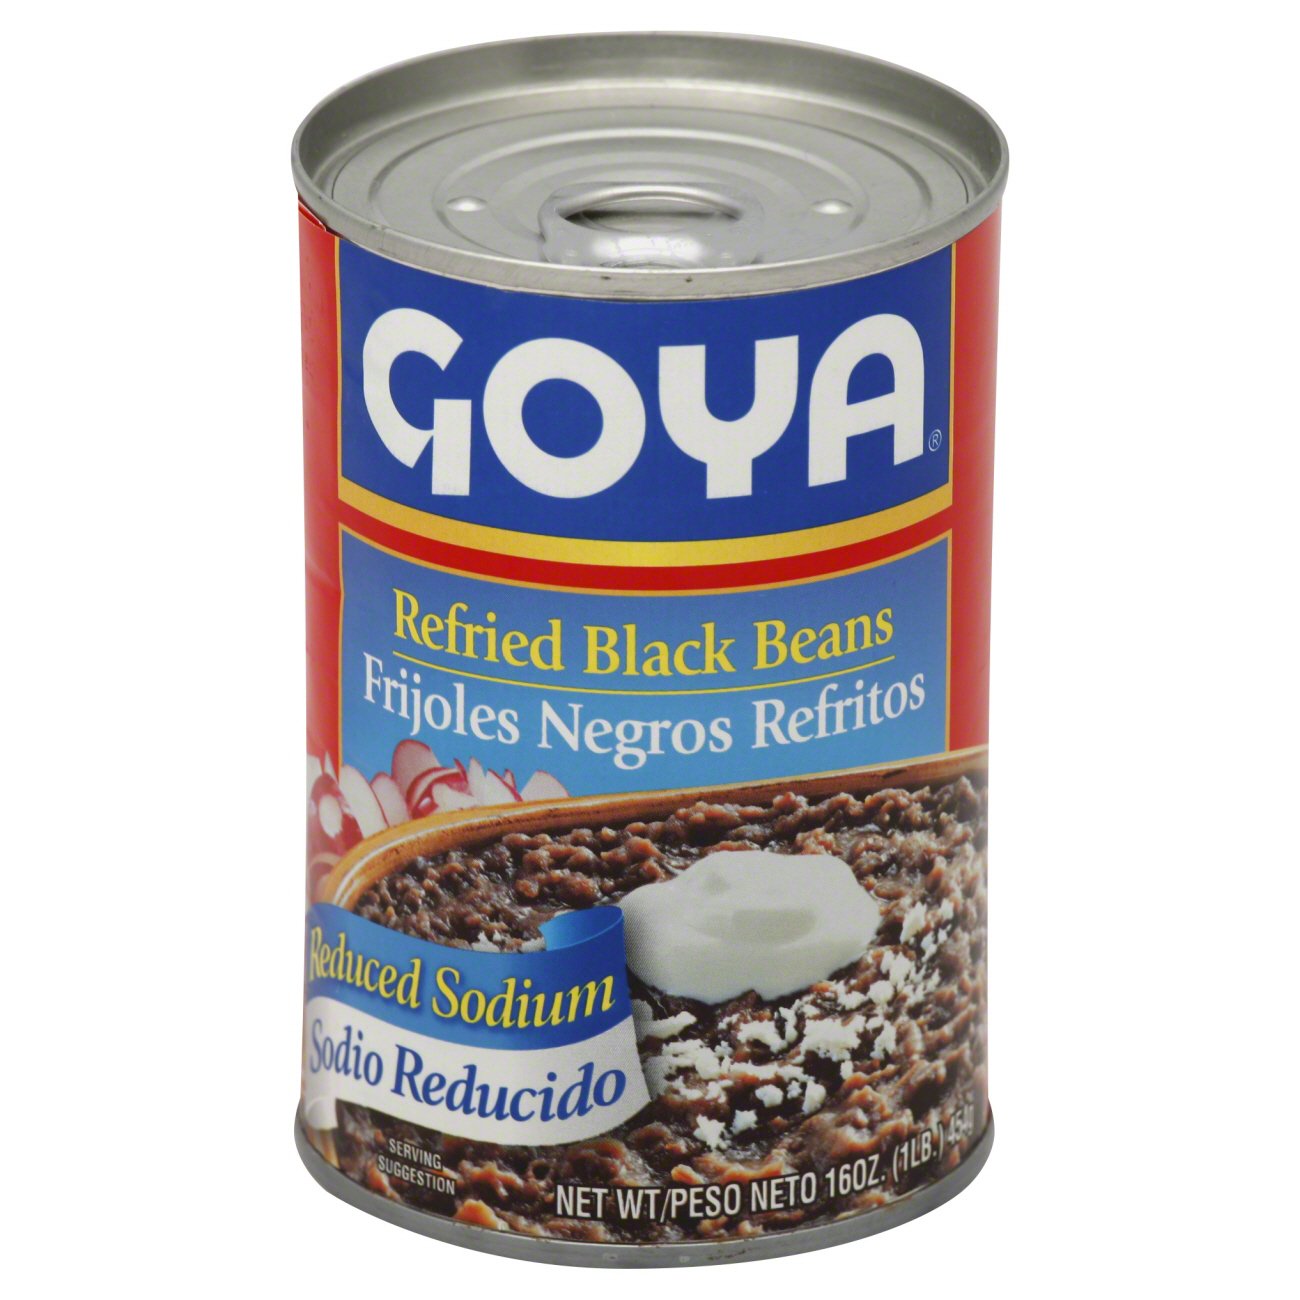 Goya Reduced Sodium Refried Black Beans Shop Beans & Legumes at HEB